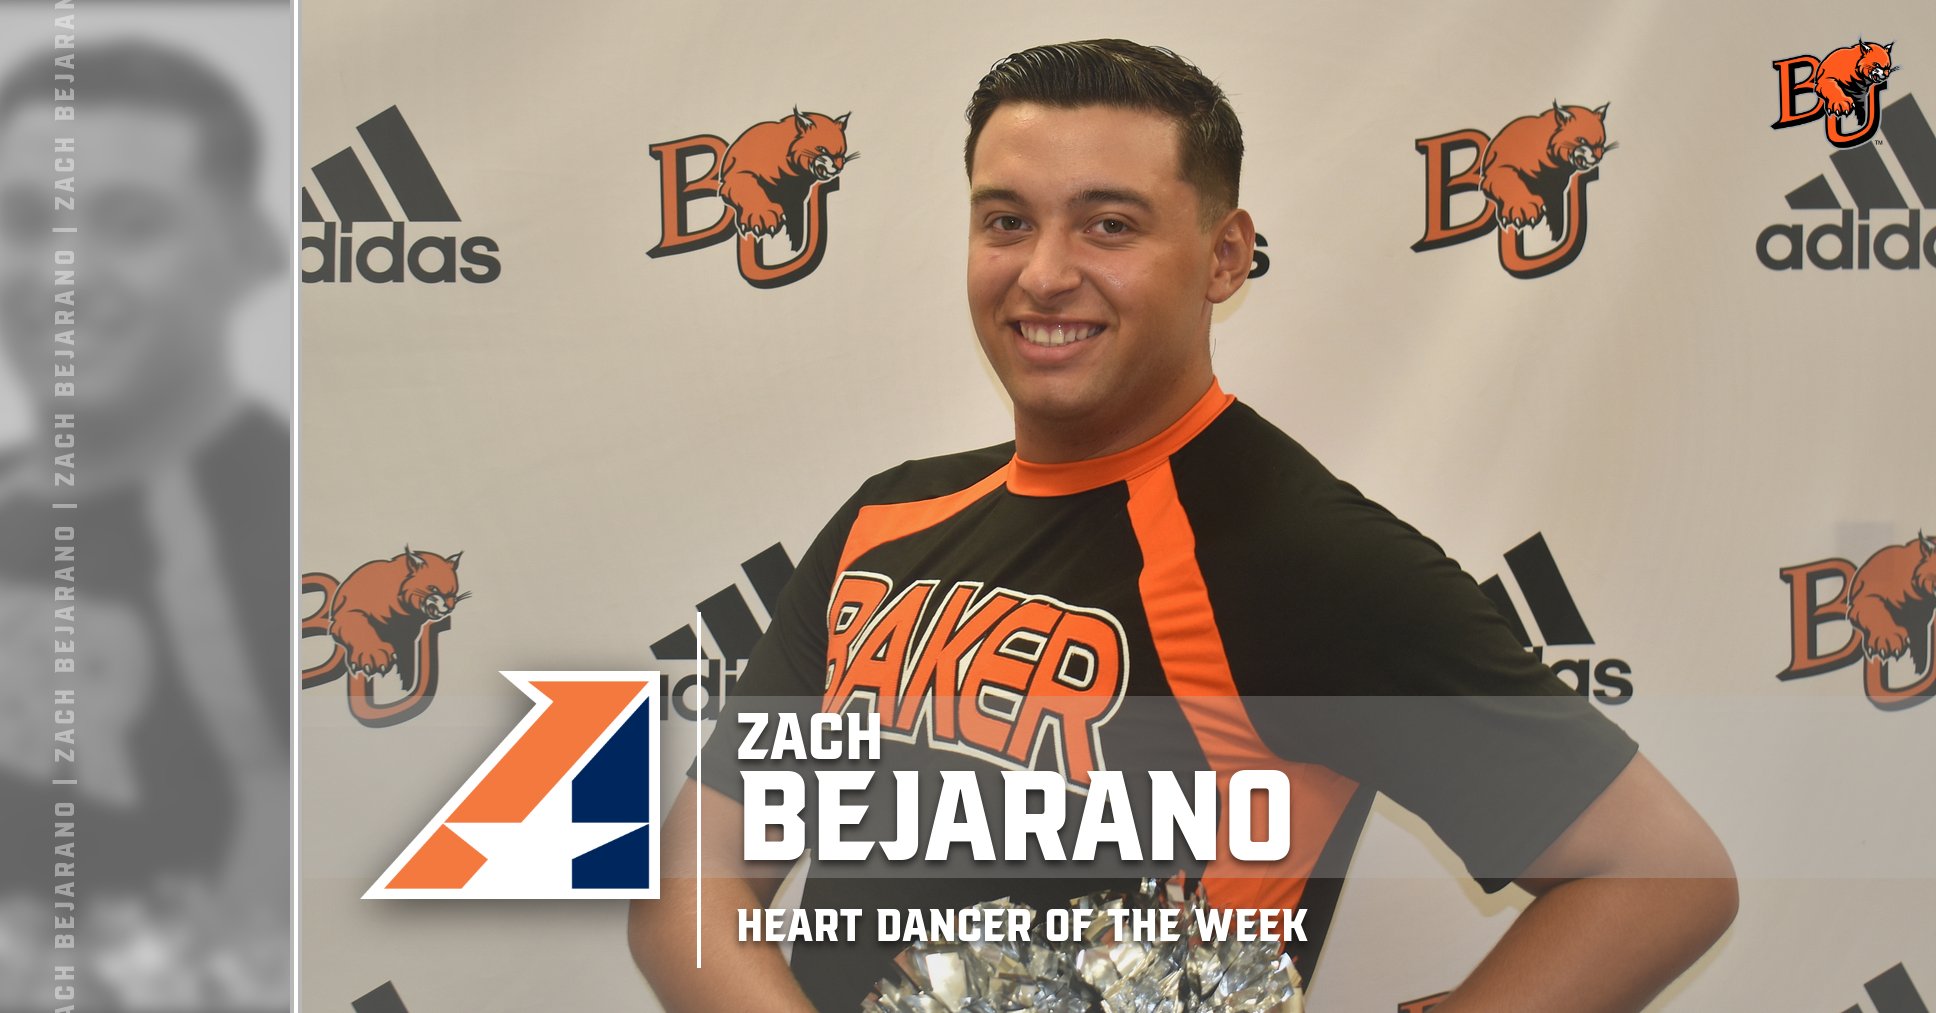 Baker’s Zach Bejarano Named Heart Dancer of the Week